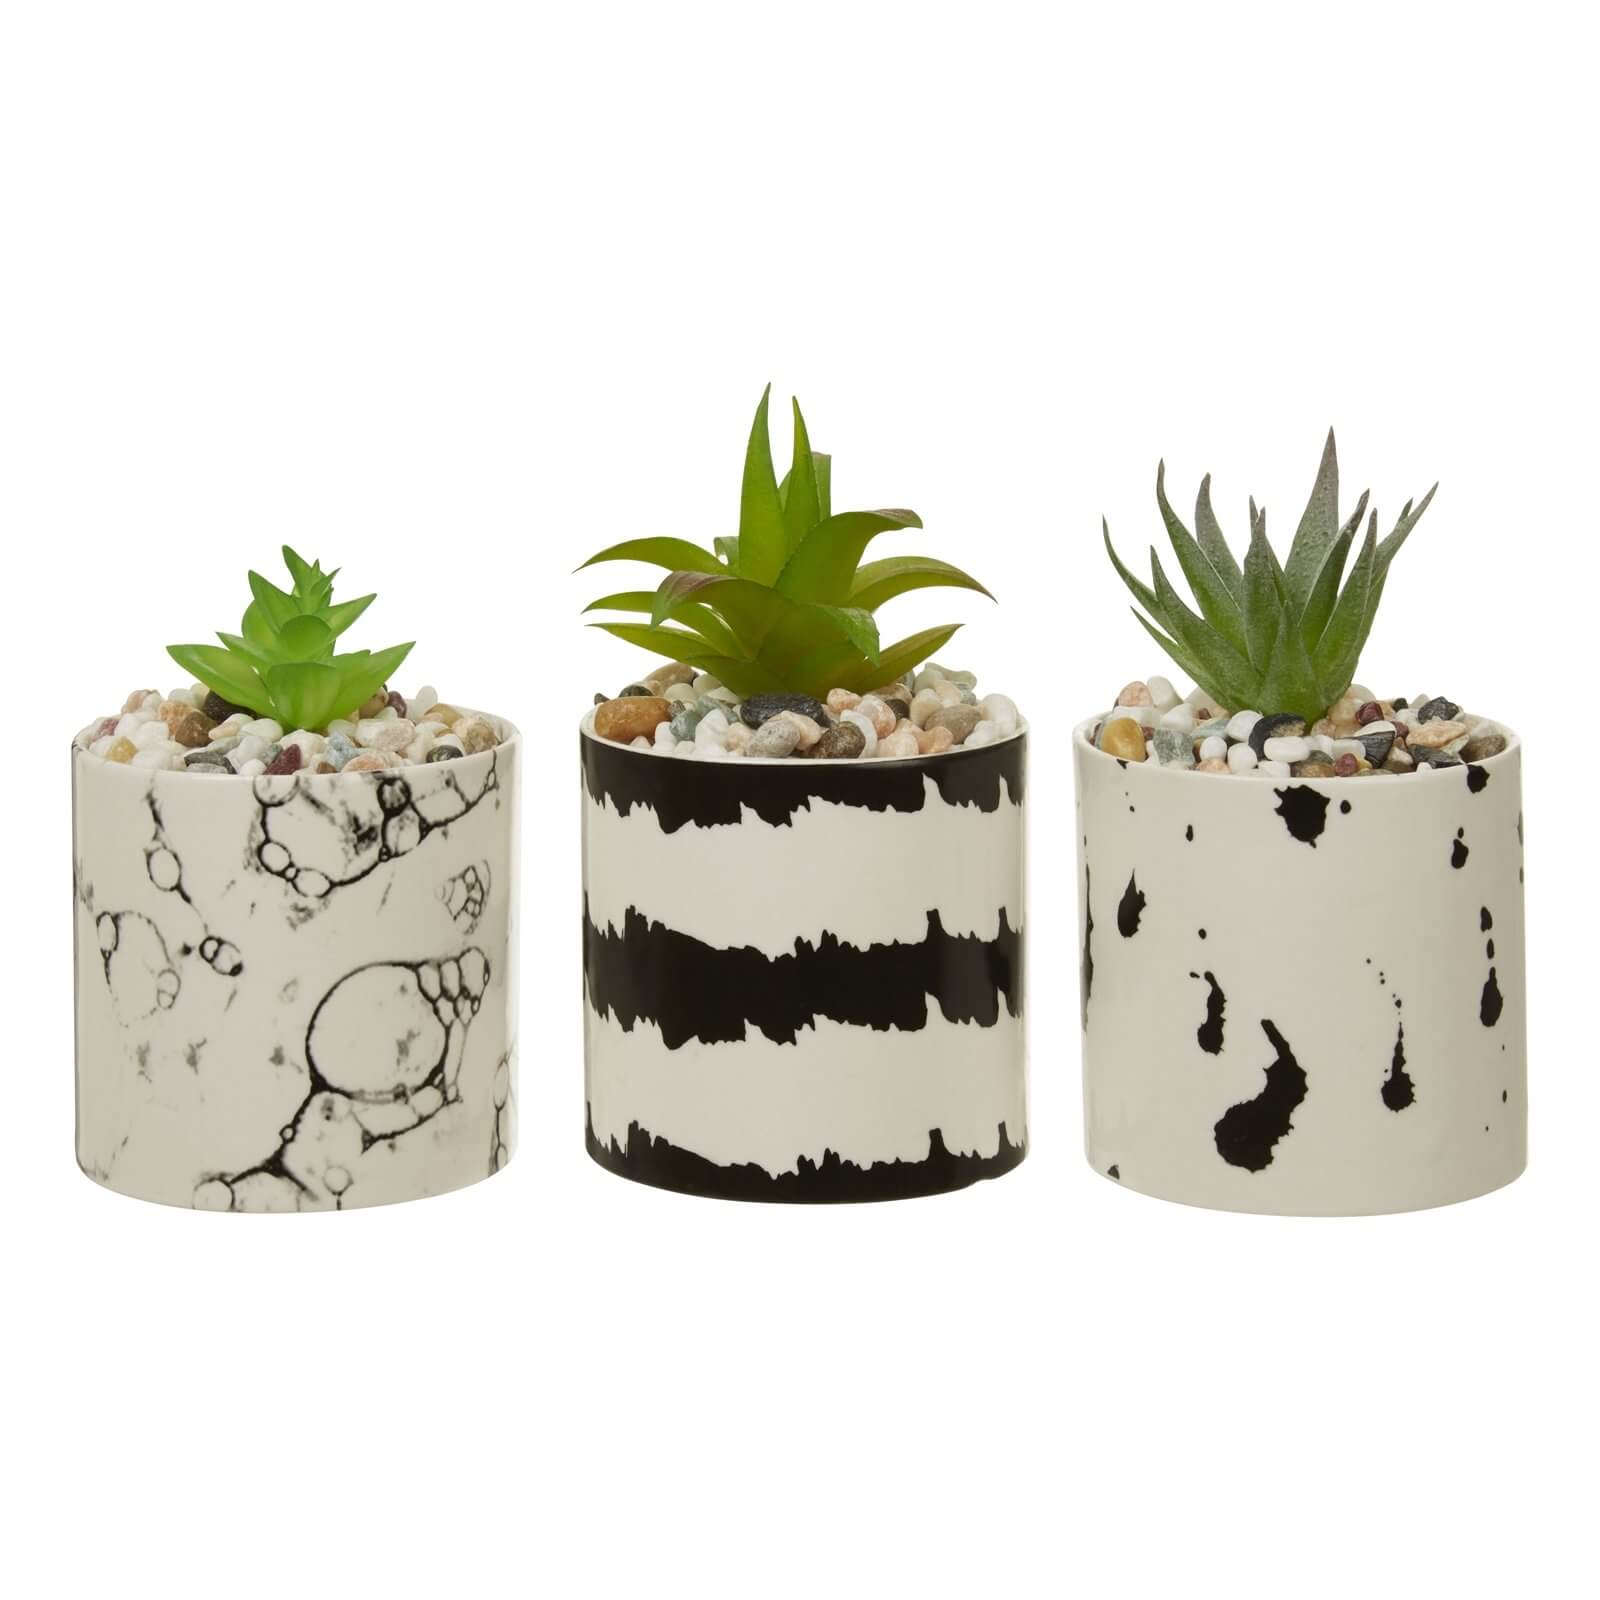 Mono Black & White Succulents - Set of 3